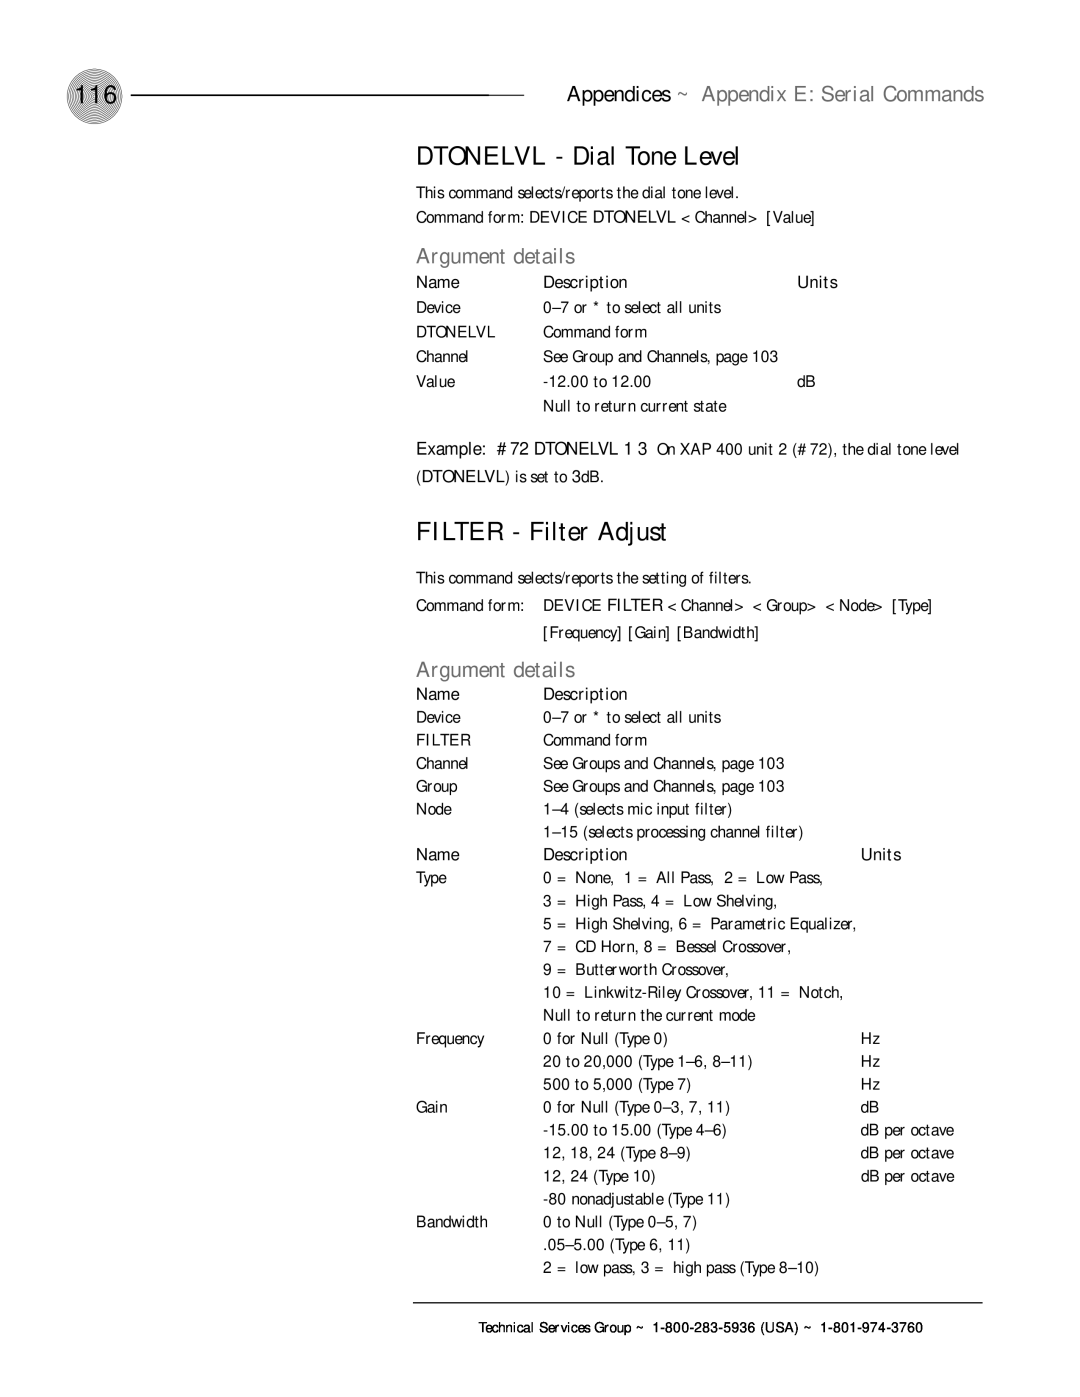 ClearOne comm XAP 400 DTONELVL - Dial Tone Level, FILTER - Filter Adjust, Argument details, Name, Description, Units 